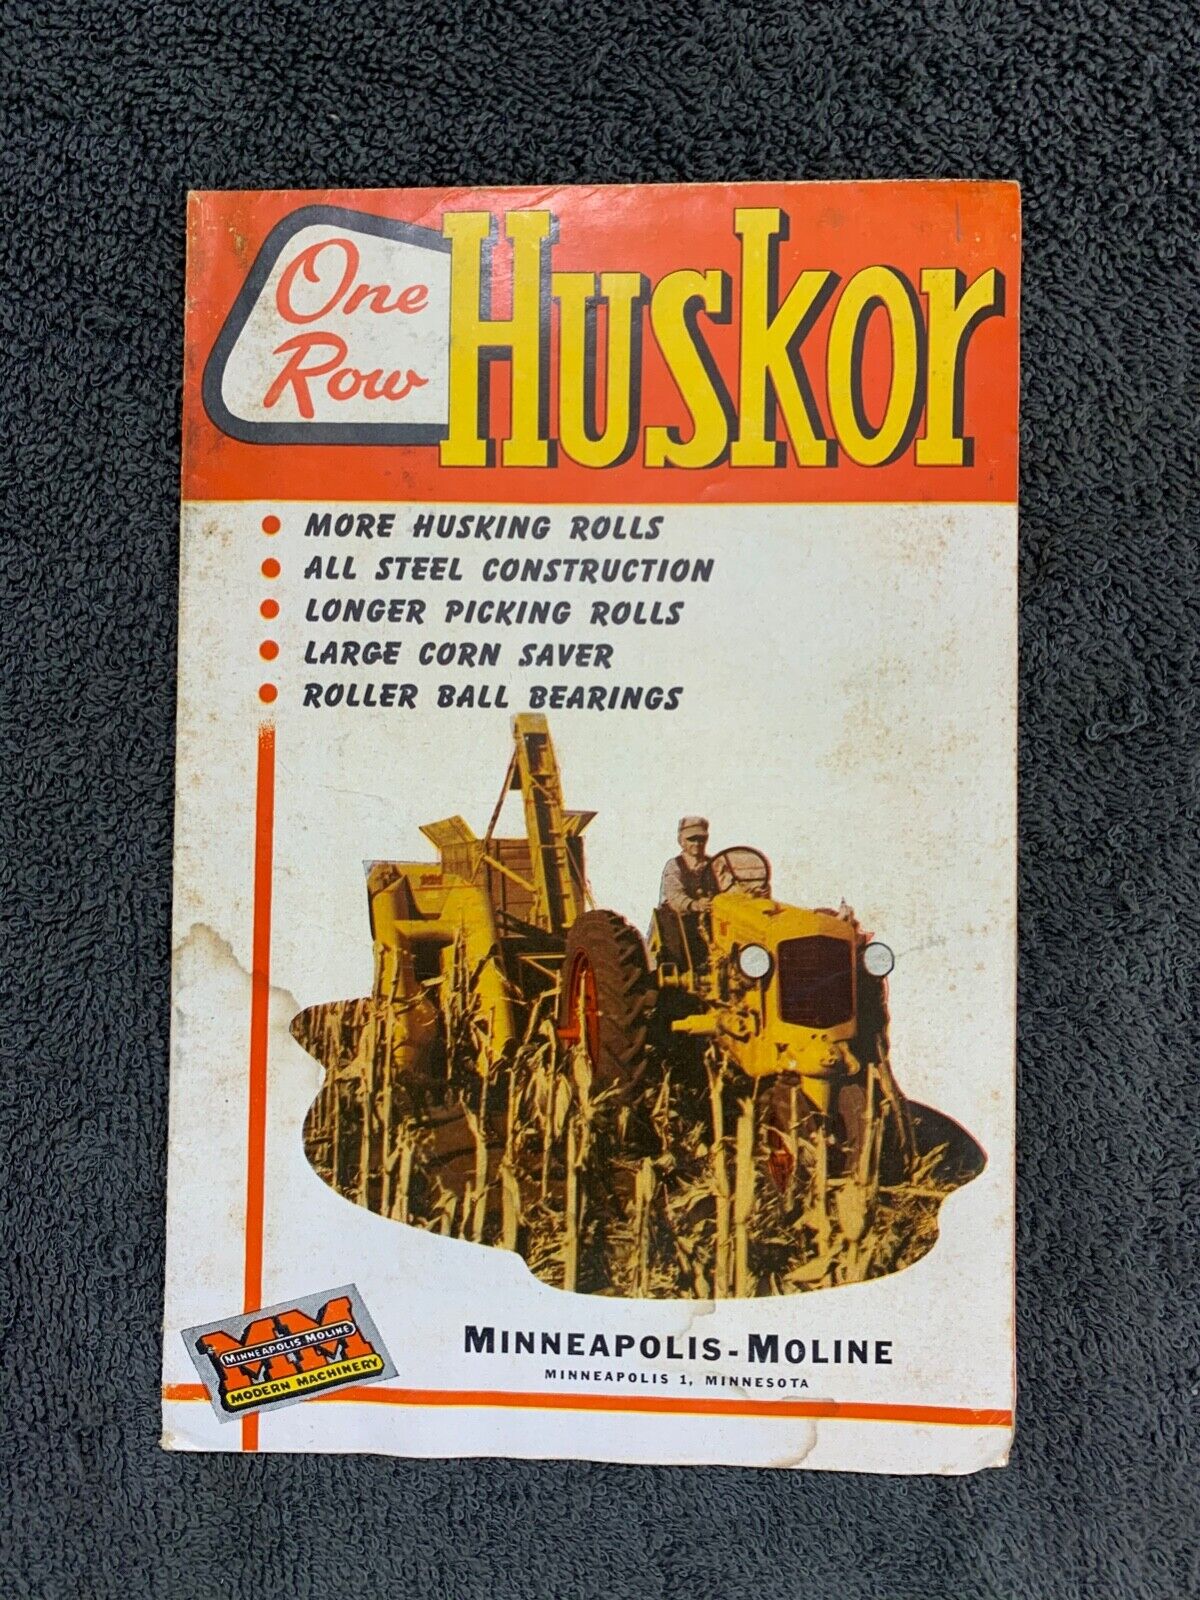 1950's Minneapolis Moline One Row Huskor Sales Brochure Implement Farm